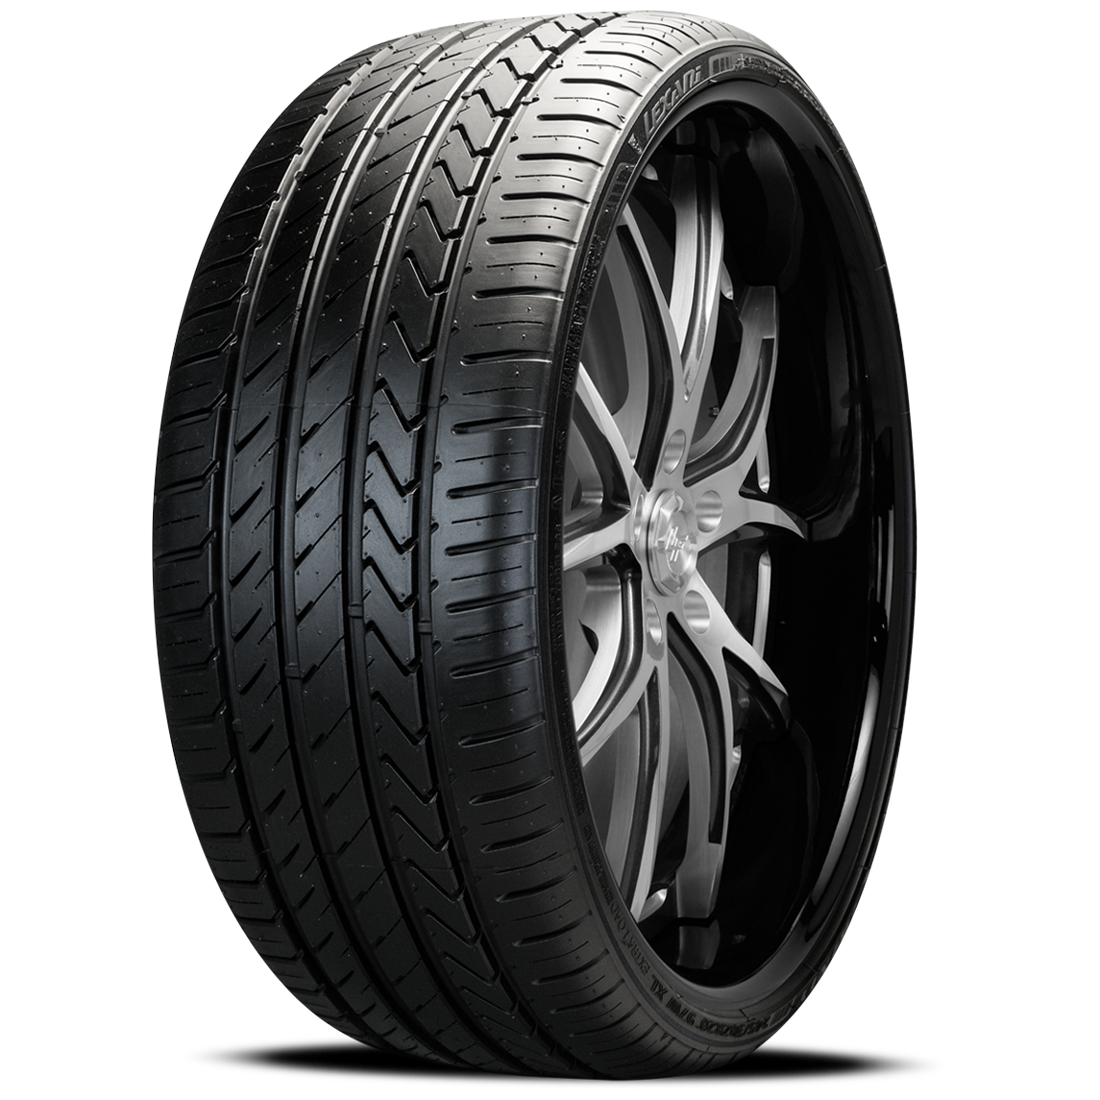 LEXANI LX-TWENTY 285/35ZR18 (25.9X11.4R 18) Tires